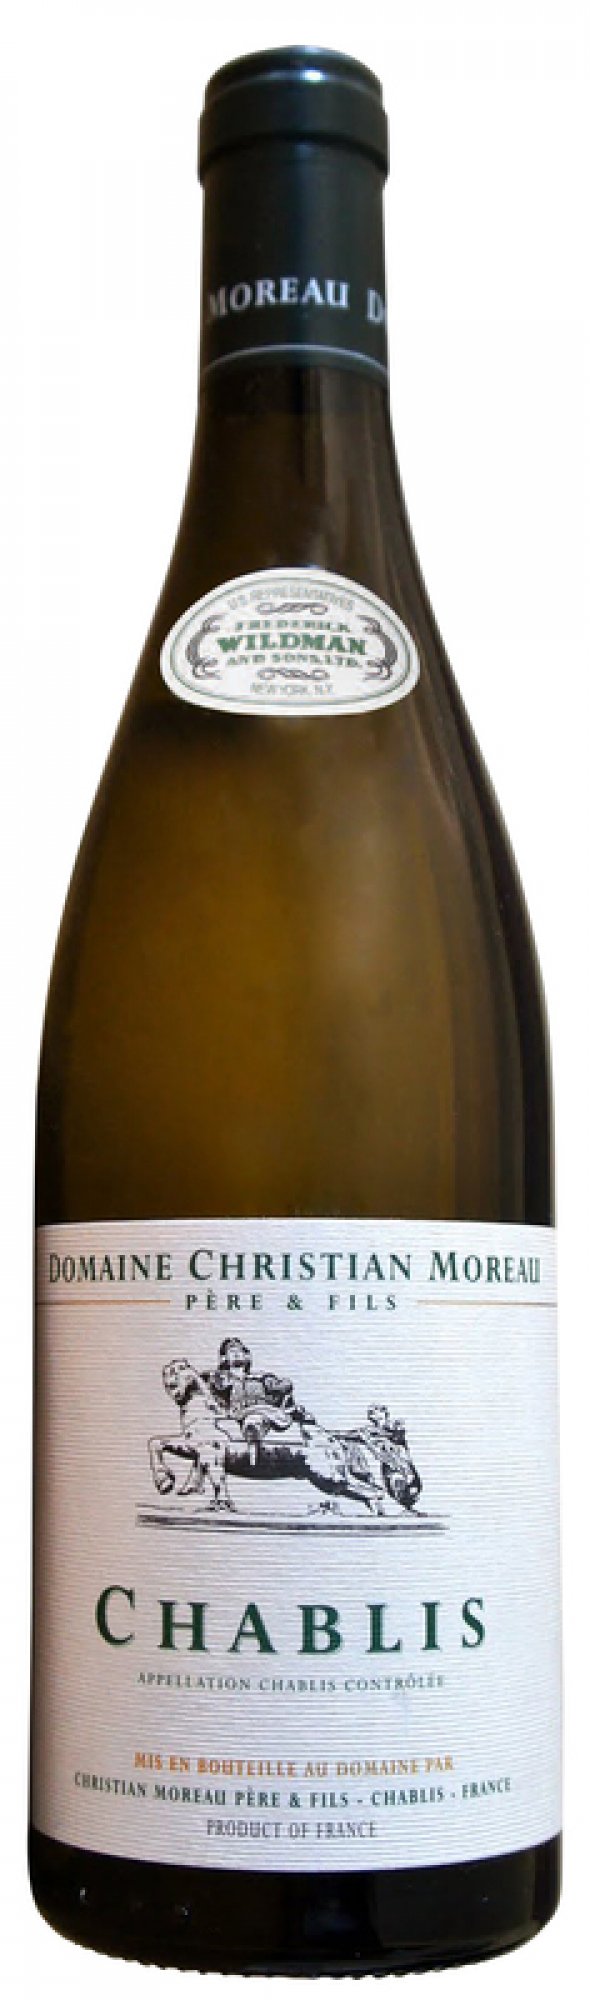 Chablis 2015 Domaine Christian Moreau France